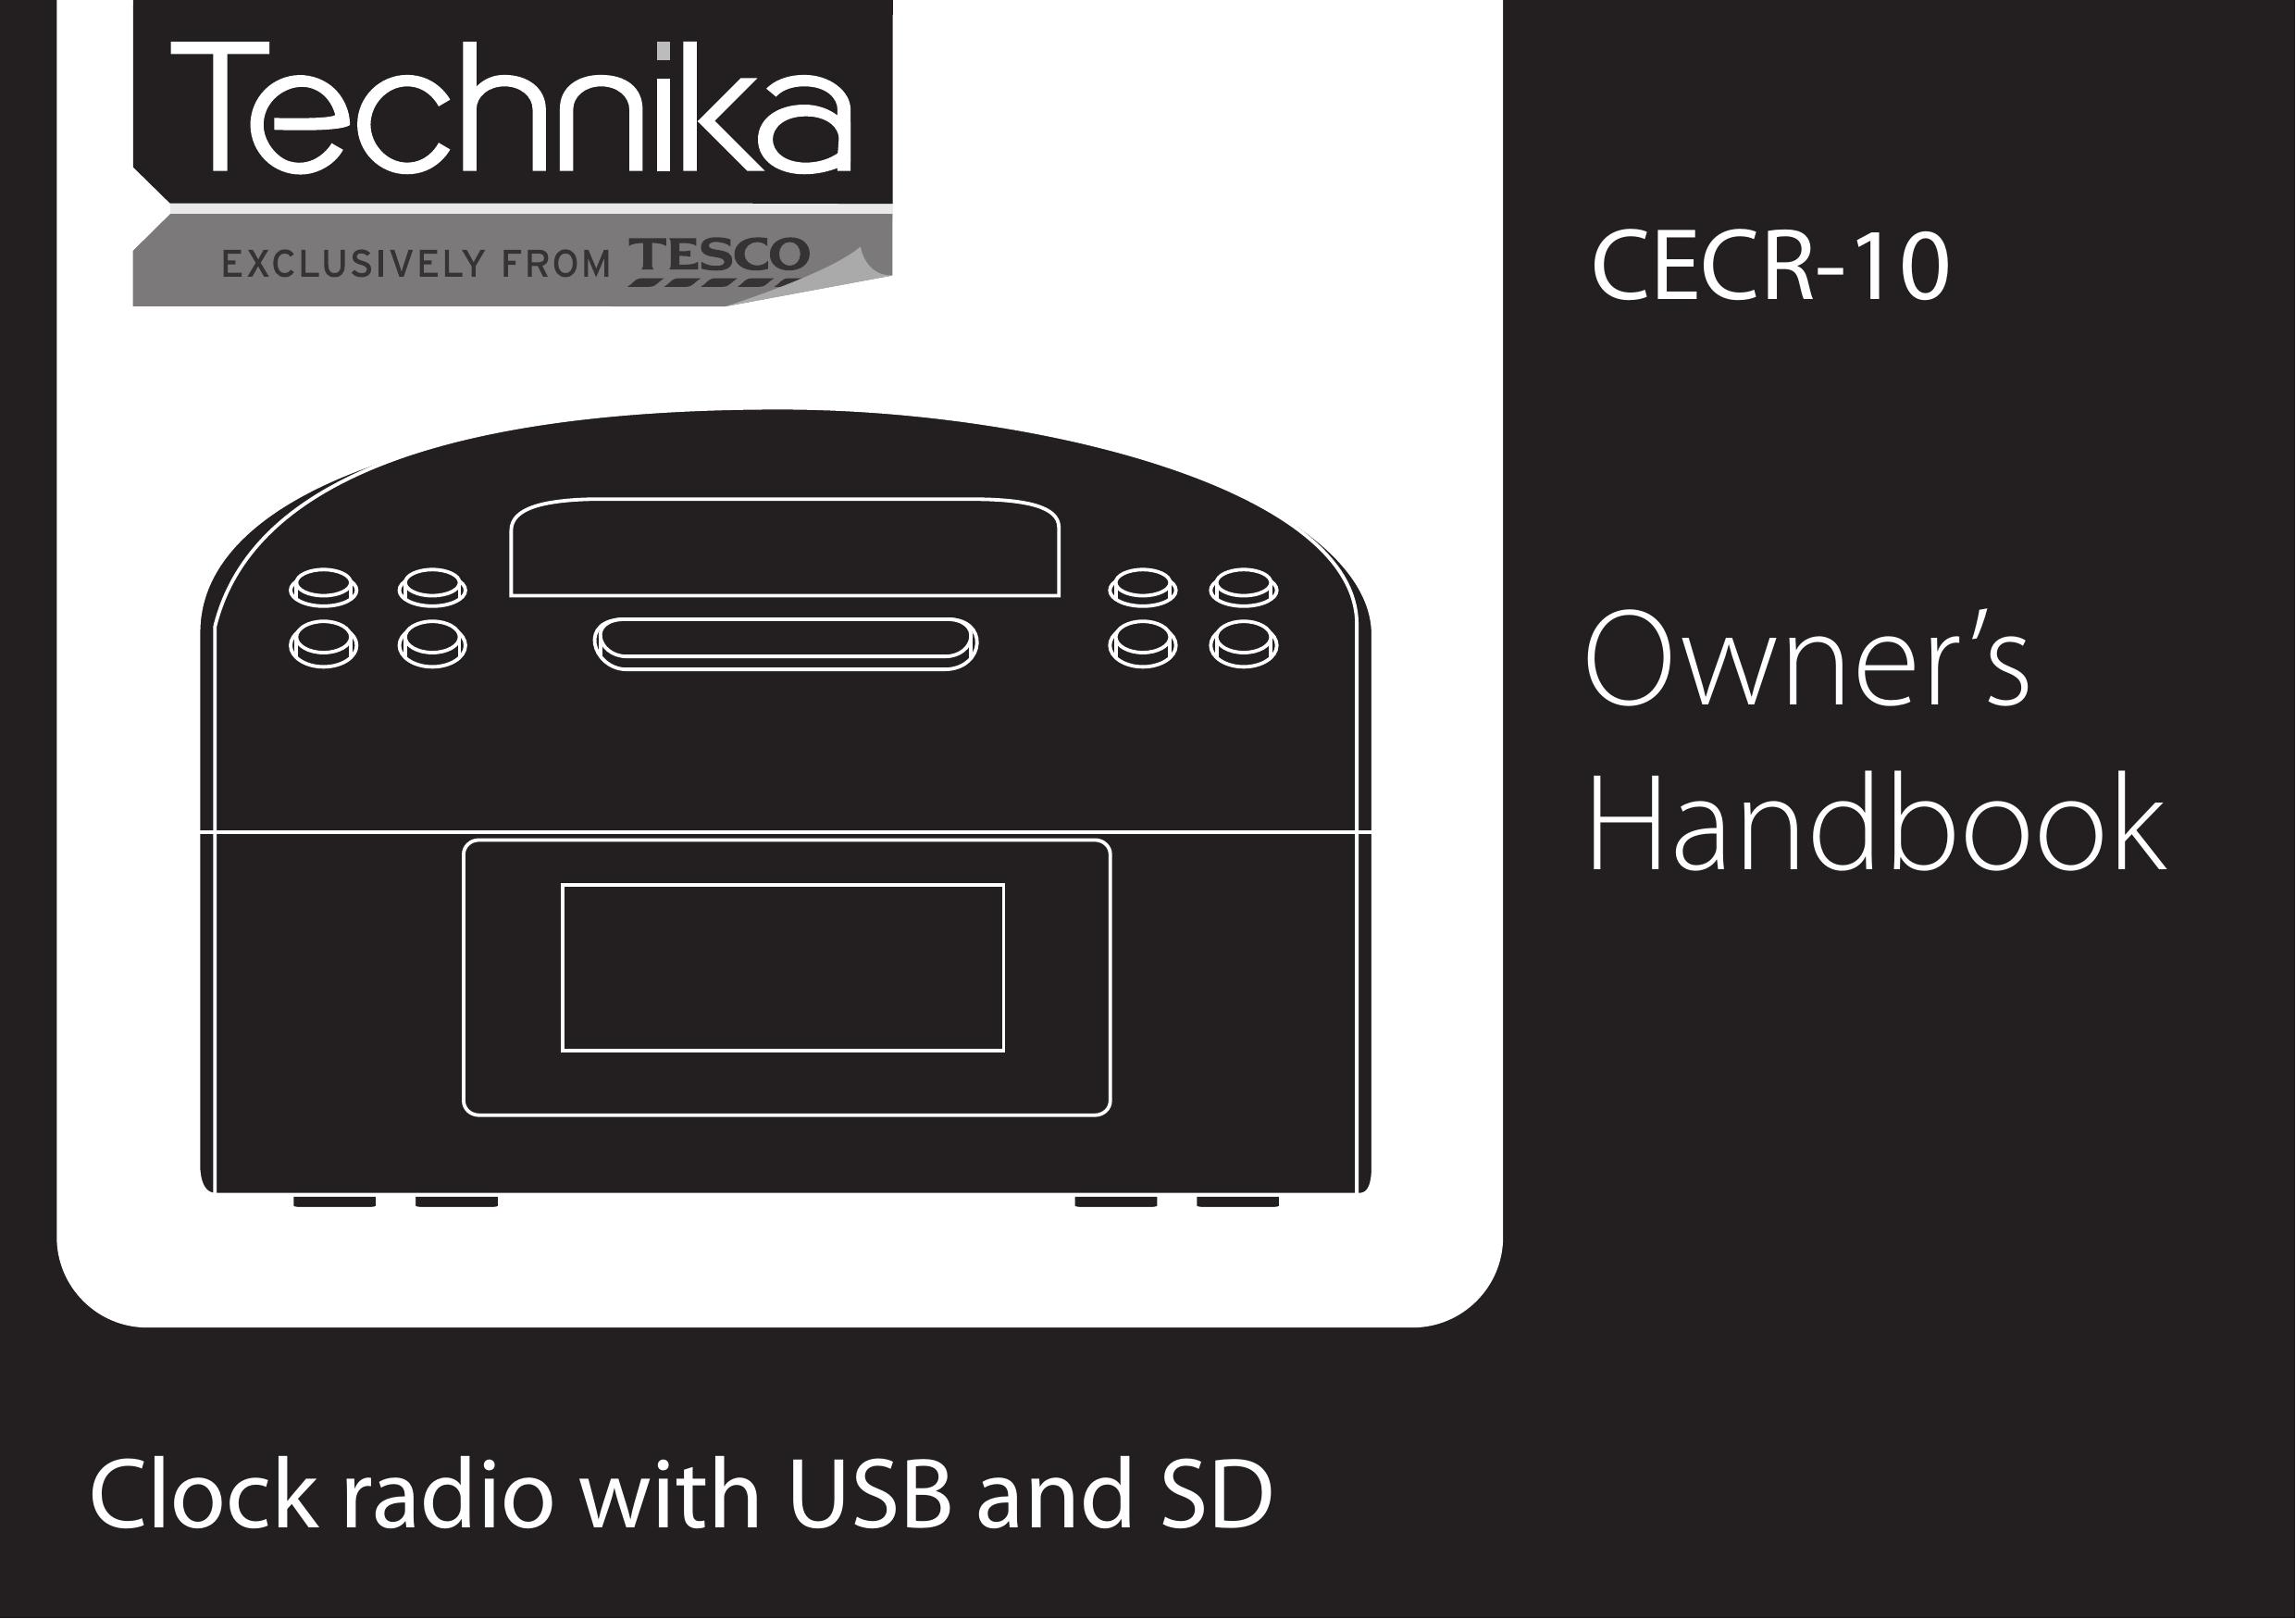 Technika CECR-10 Clock Radio User Manual